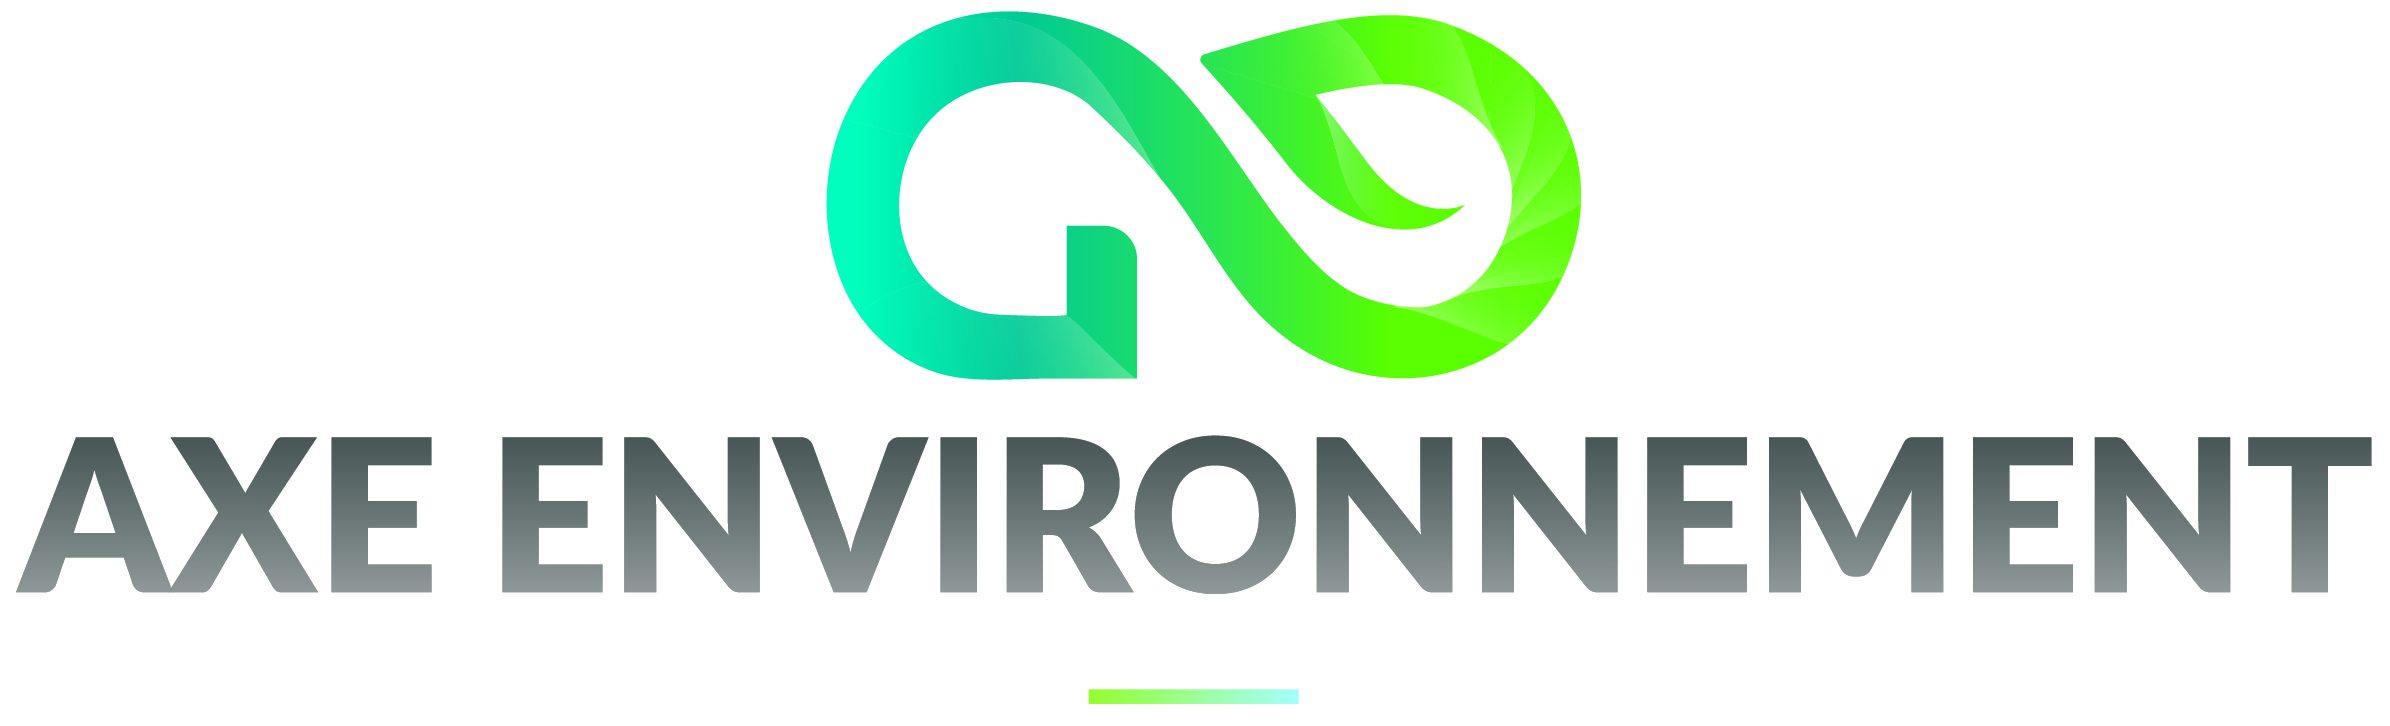 Axe Environnement-logo-coul